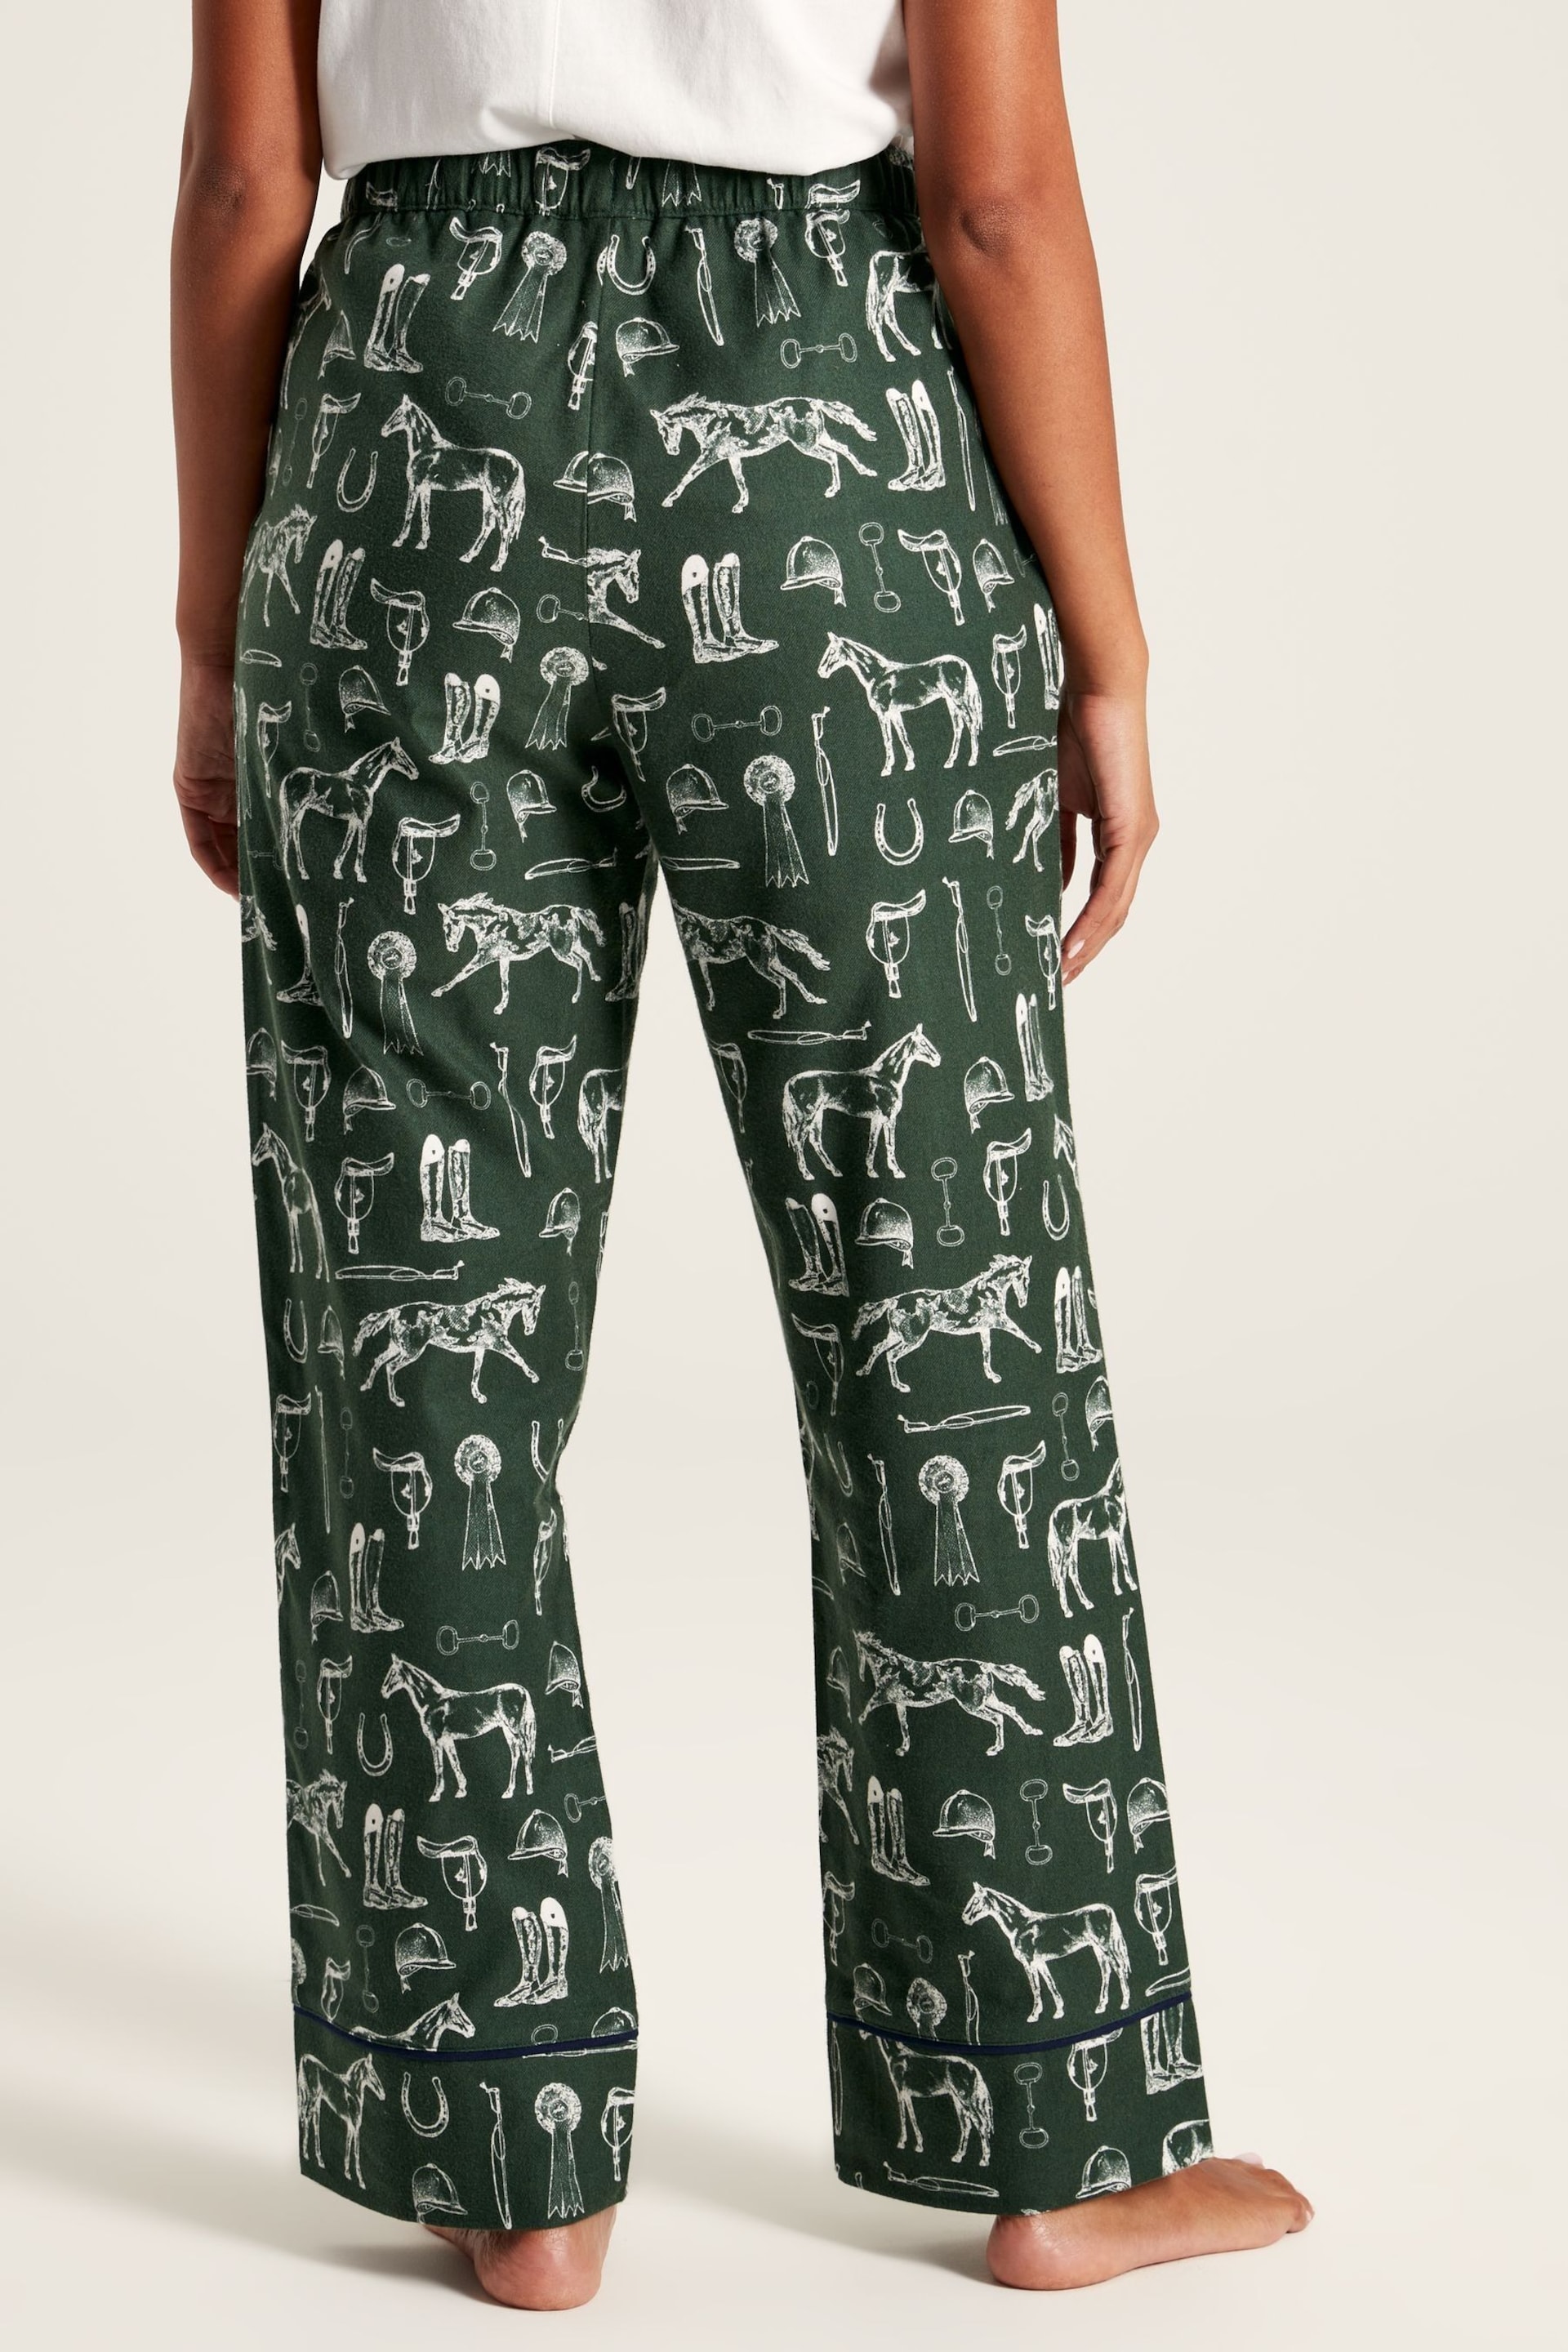 Joules Stella Green Cotton Pyjama Bottoms - Image 2 of 6